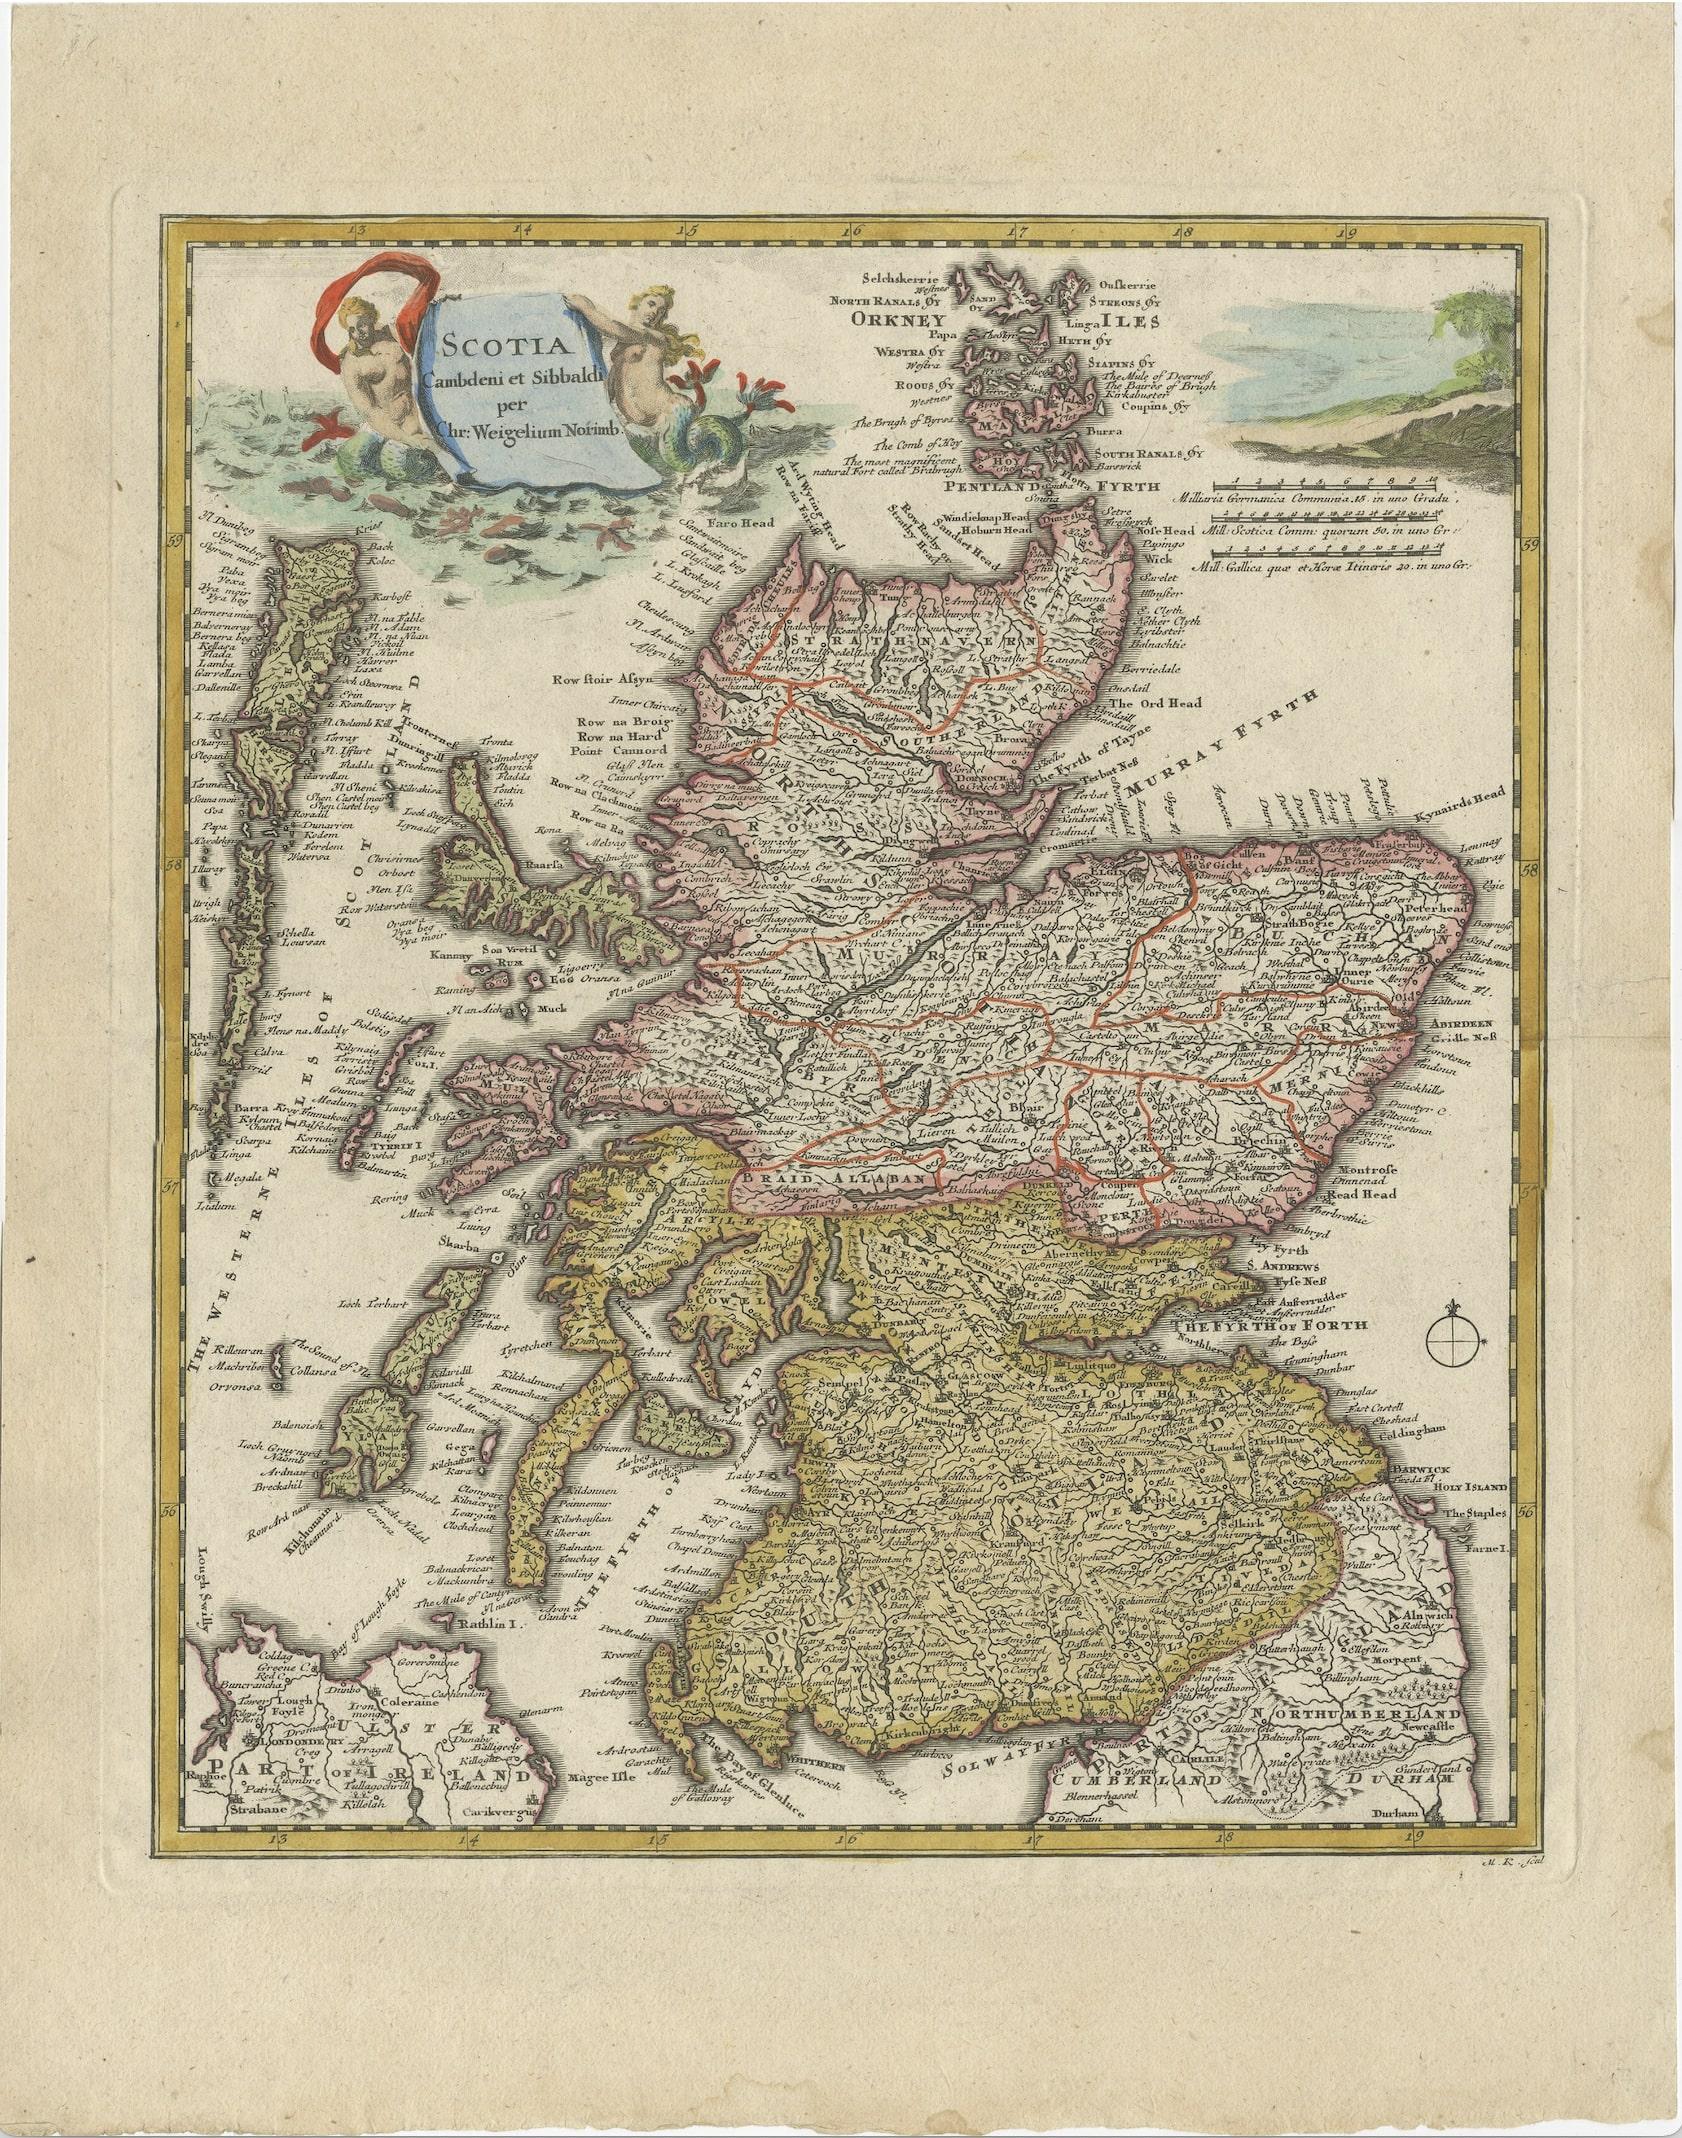 Decorative antique map of Scotland with title: Scotia Cambdeni Et Sibbaldi per Chr. Weigelium Norimb.

Old coloured map of Scotland that was printed in Nuremberg by Johann Ernst Adelbulner in 1718. Engraved by Michael Kauffer.

Artist: Johann